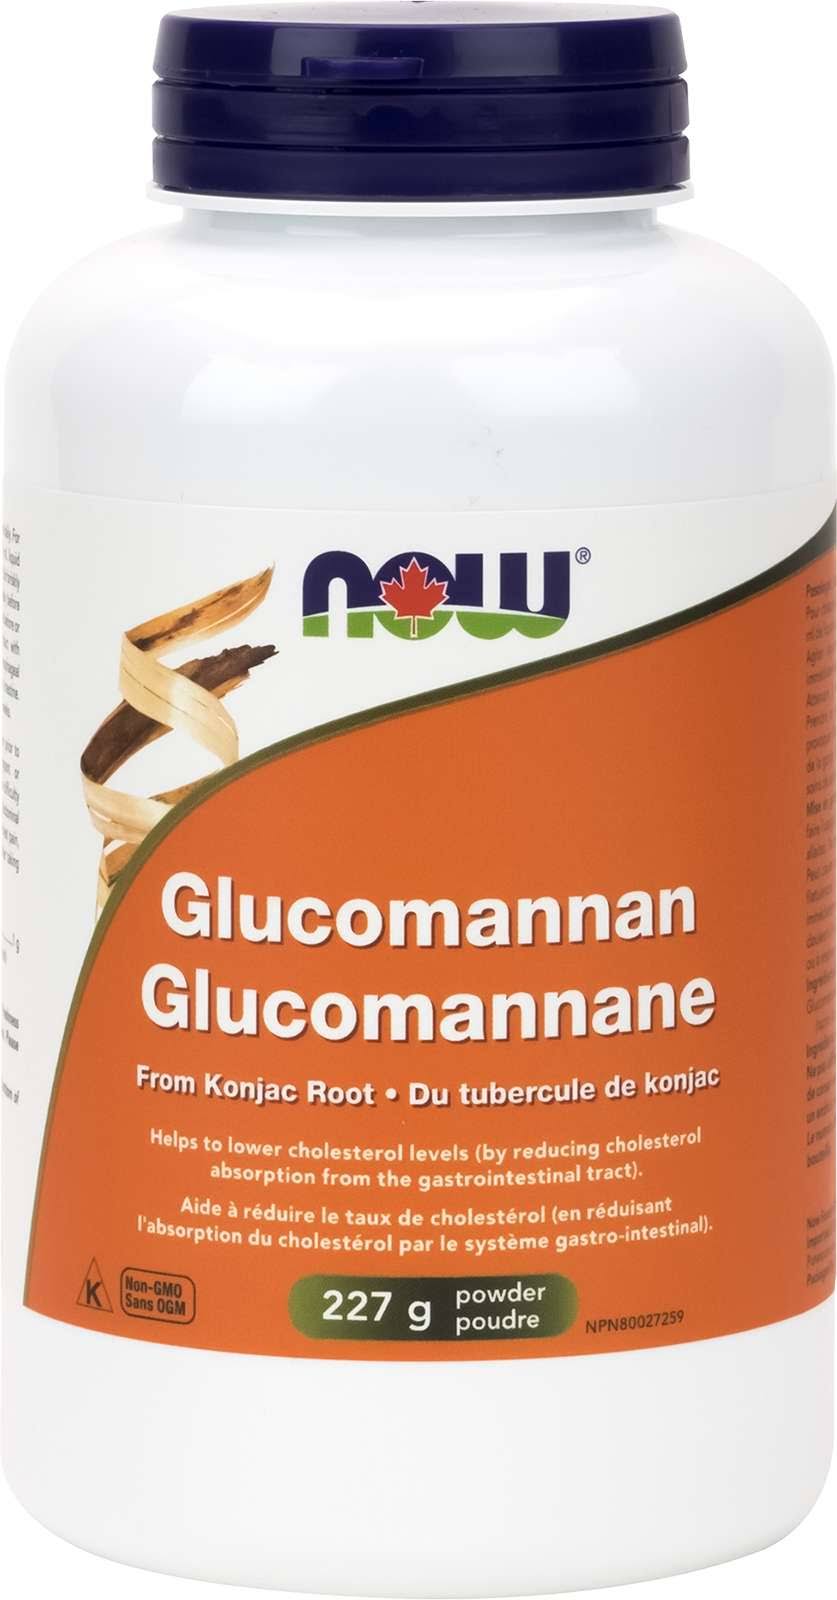 NOW Foods Glucomannan Powder Dietary Supplement - 227g